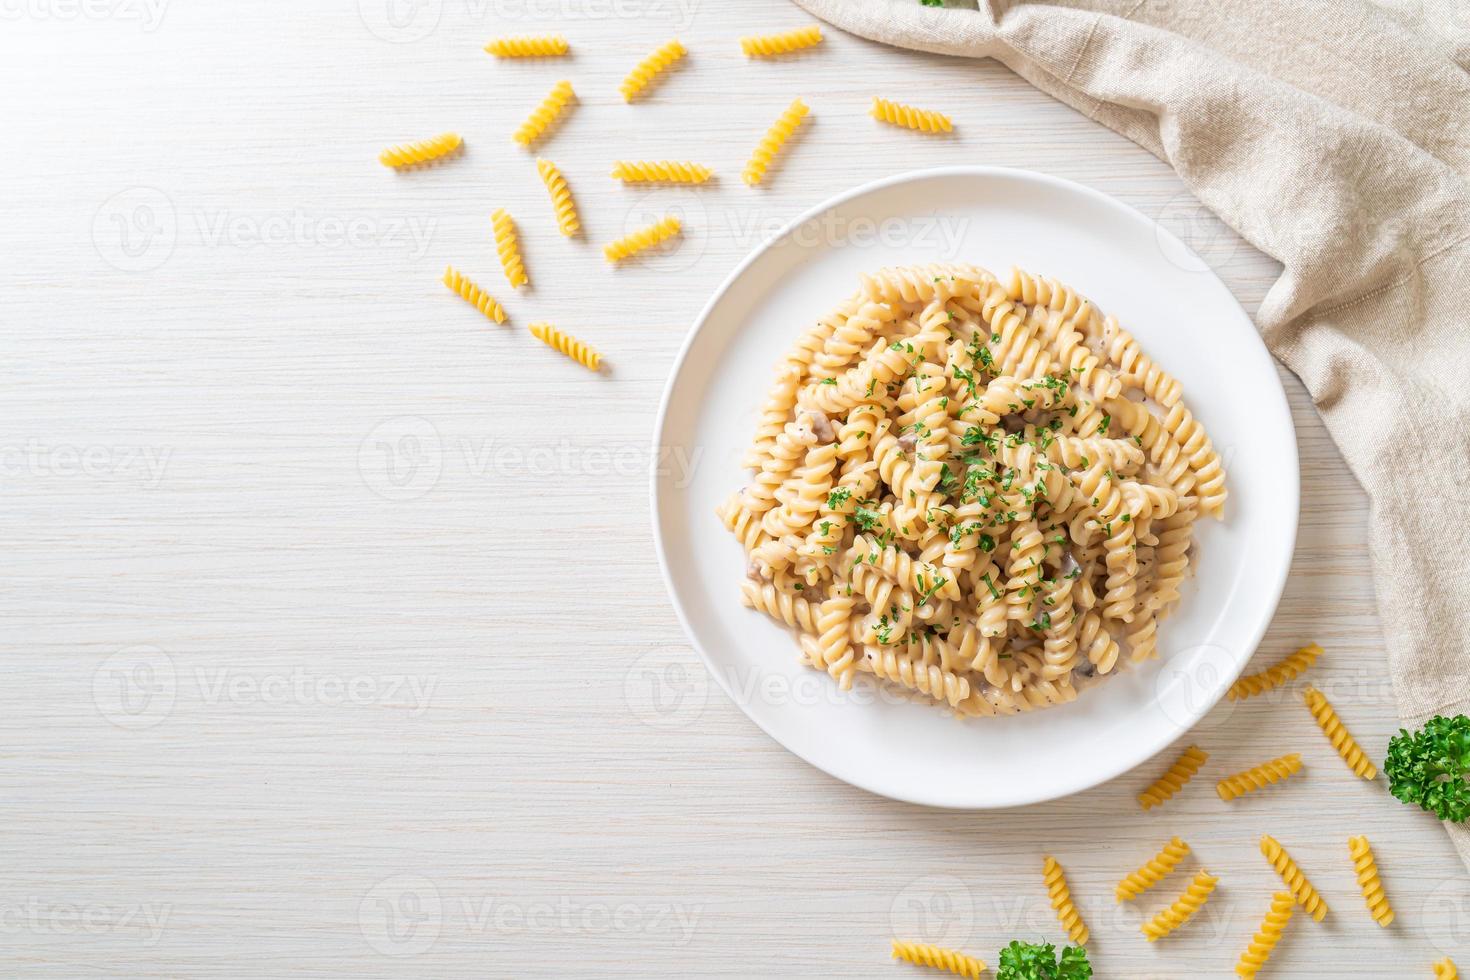 Spirali or spiral pasta mushroom cream sauce with parsley - Italian food style photo